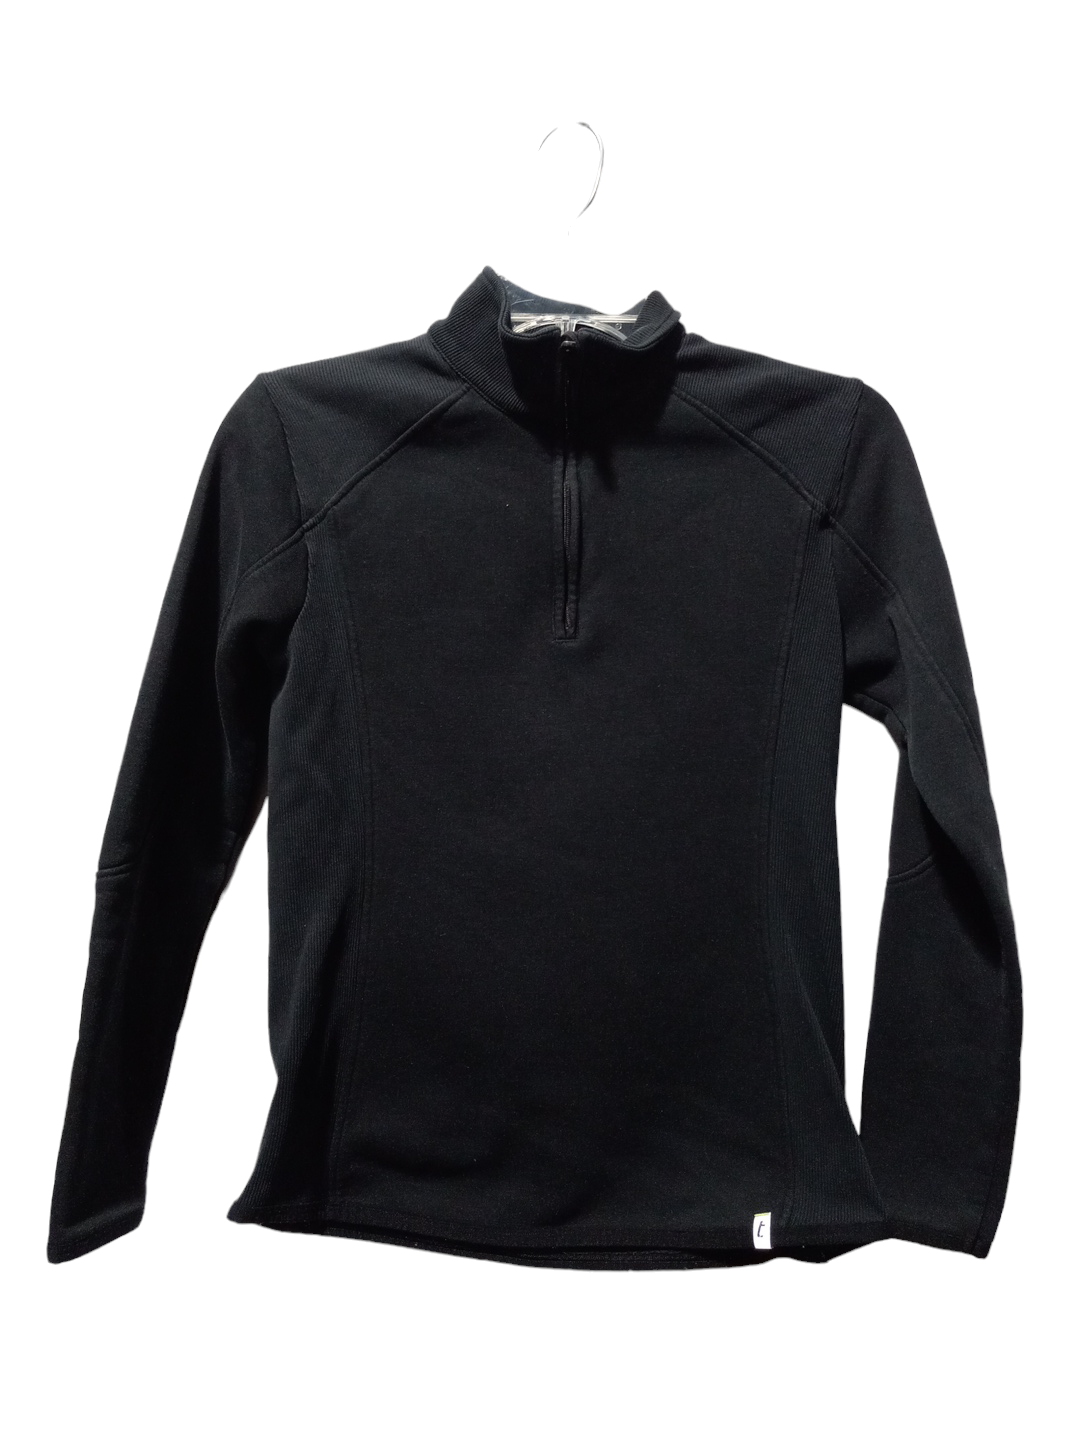 Black Athletic Jacket Clothes Mentor, Size Xs